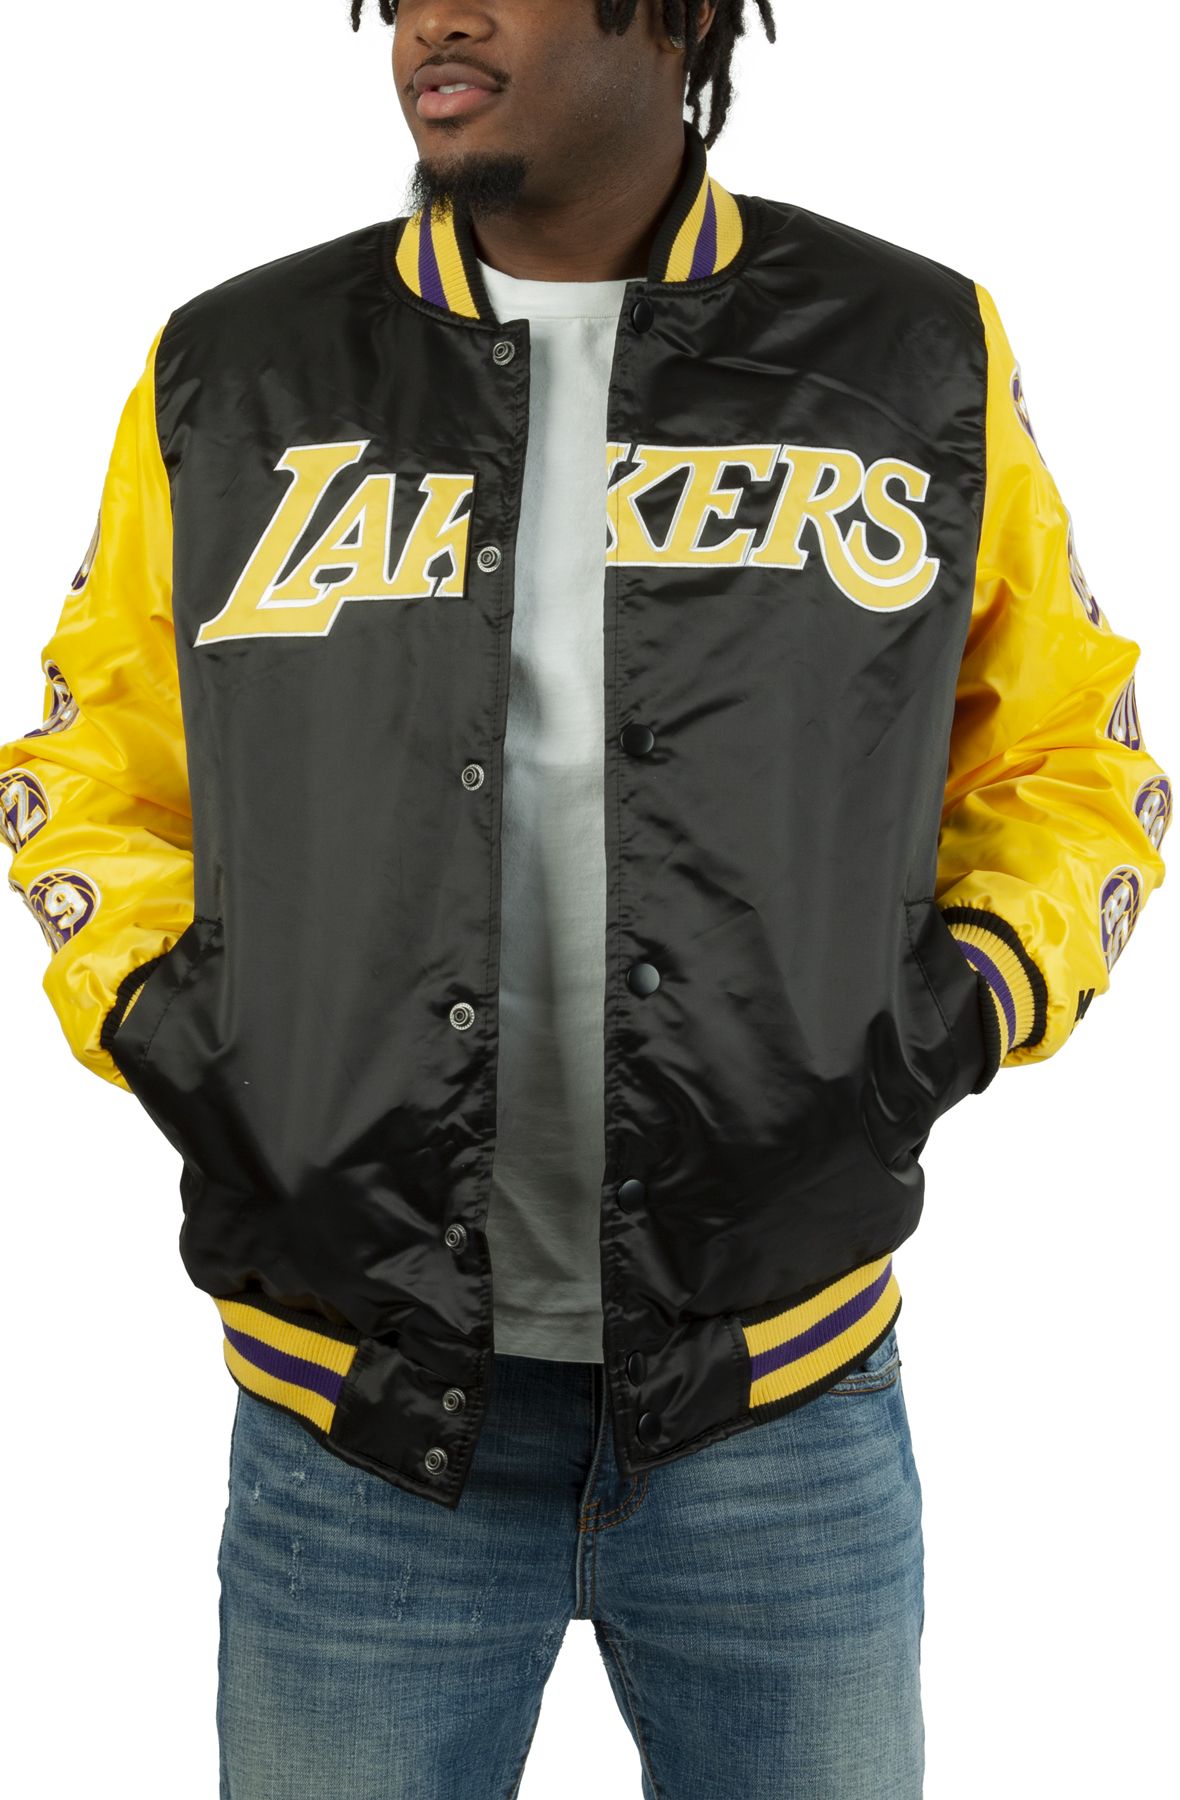 lakers team jacket